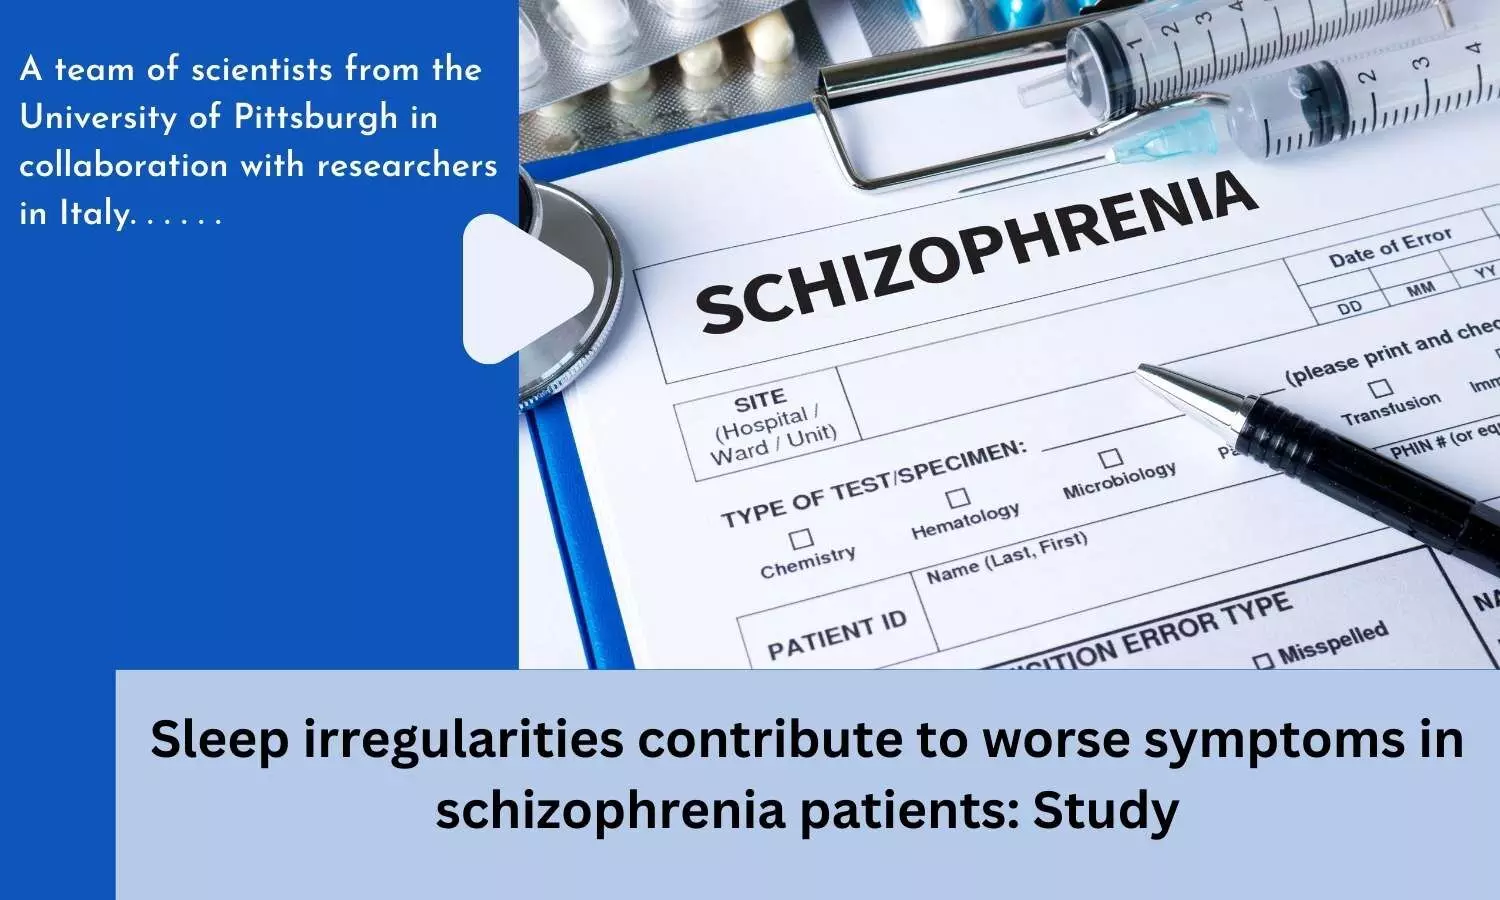 Sleep irregularities contribute to worse symptoms in schizophrenia patients: Study